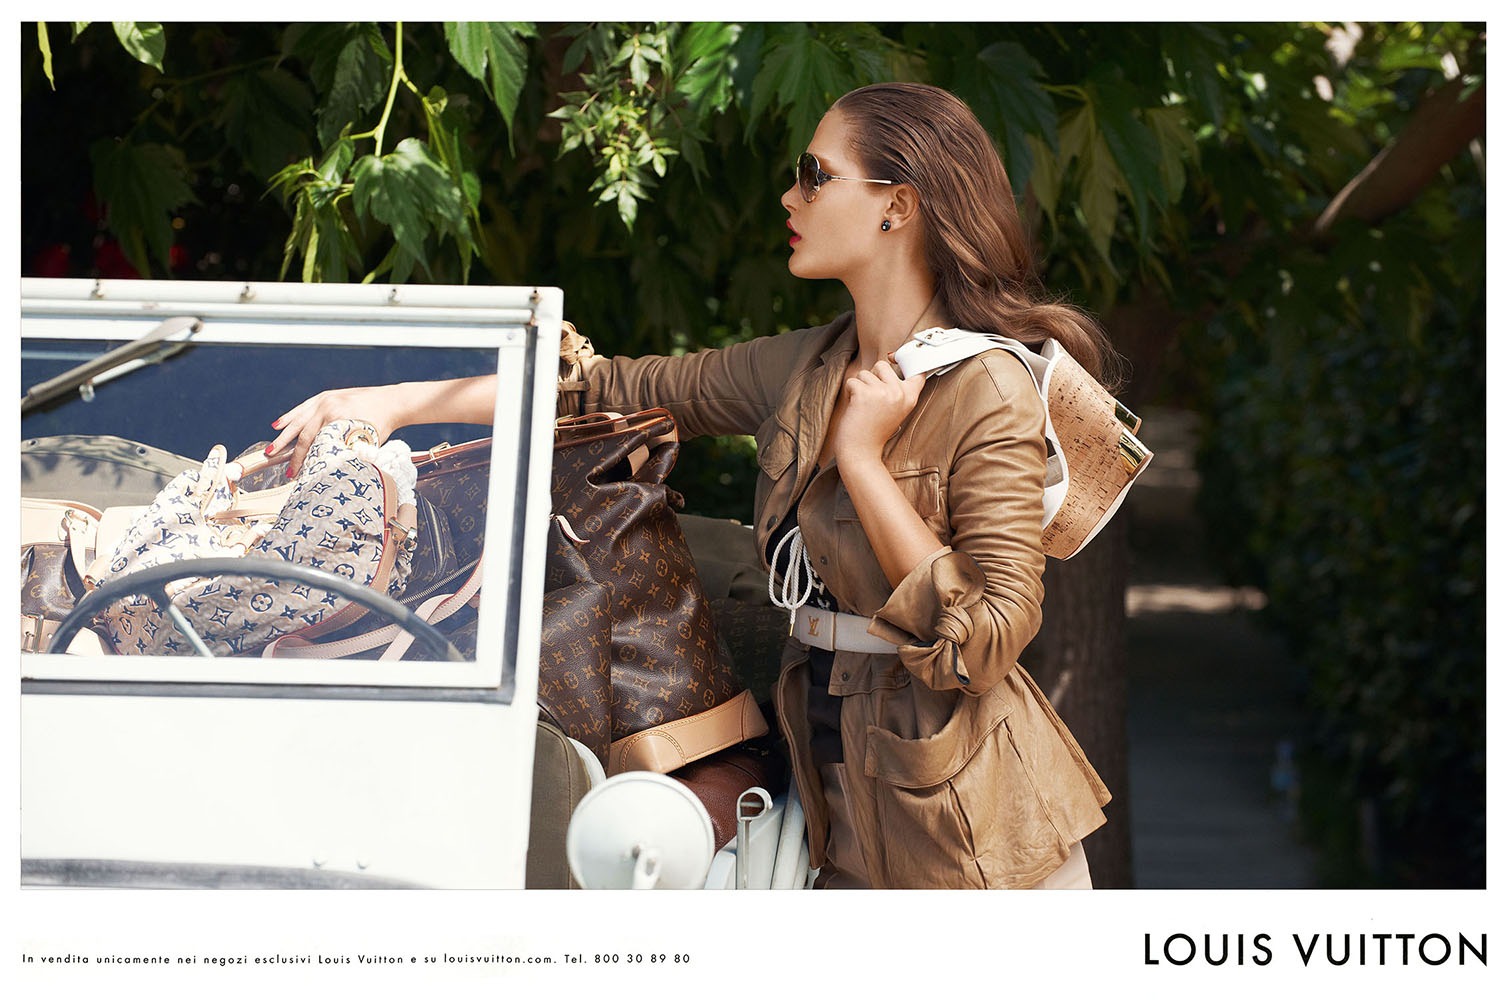 Louis Vuitton 2 by Phil POYNTER